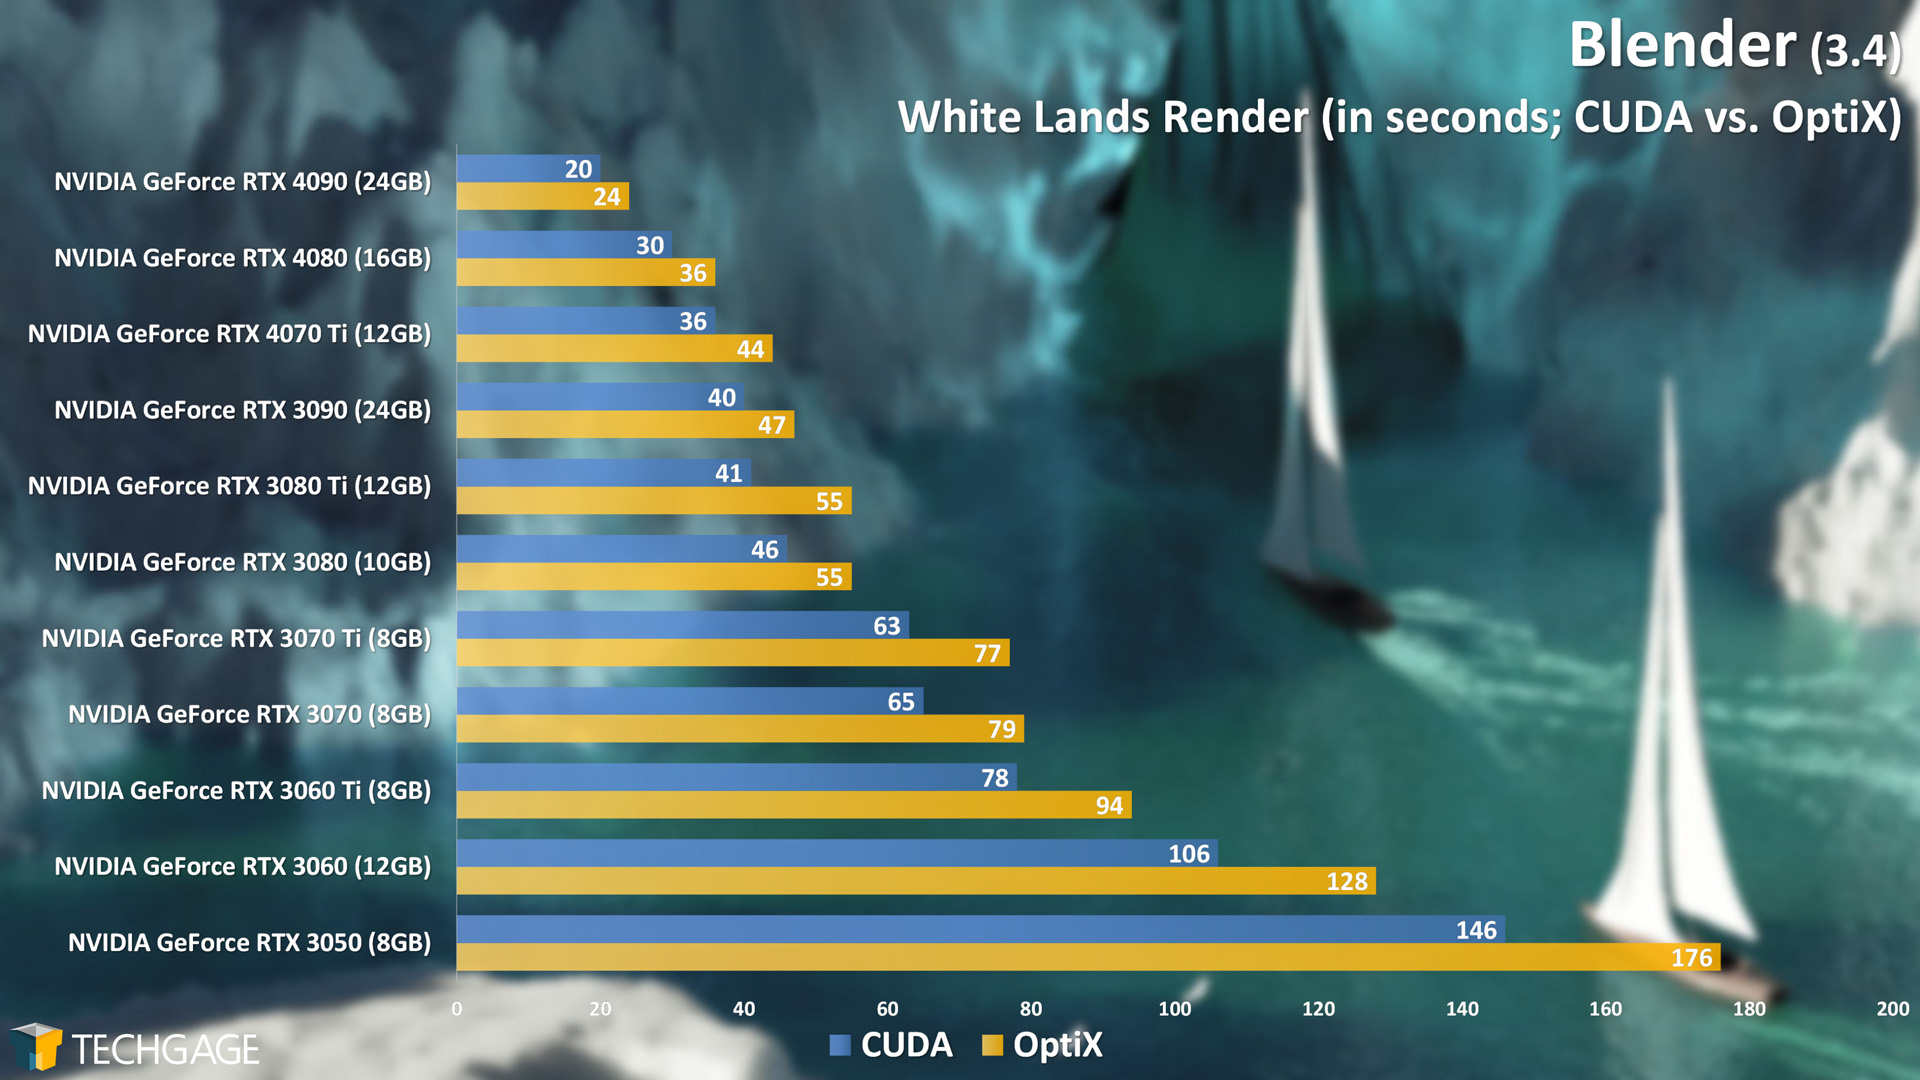 Blender - Cycles GPU Render Performance (White Lands) (CUDA vs OptiX)